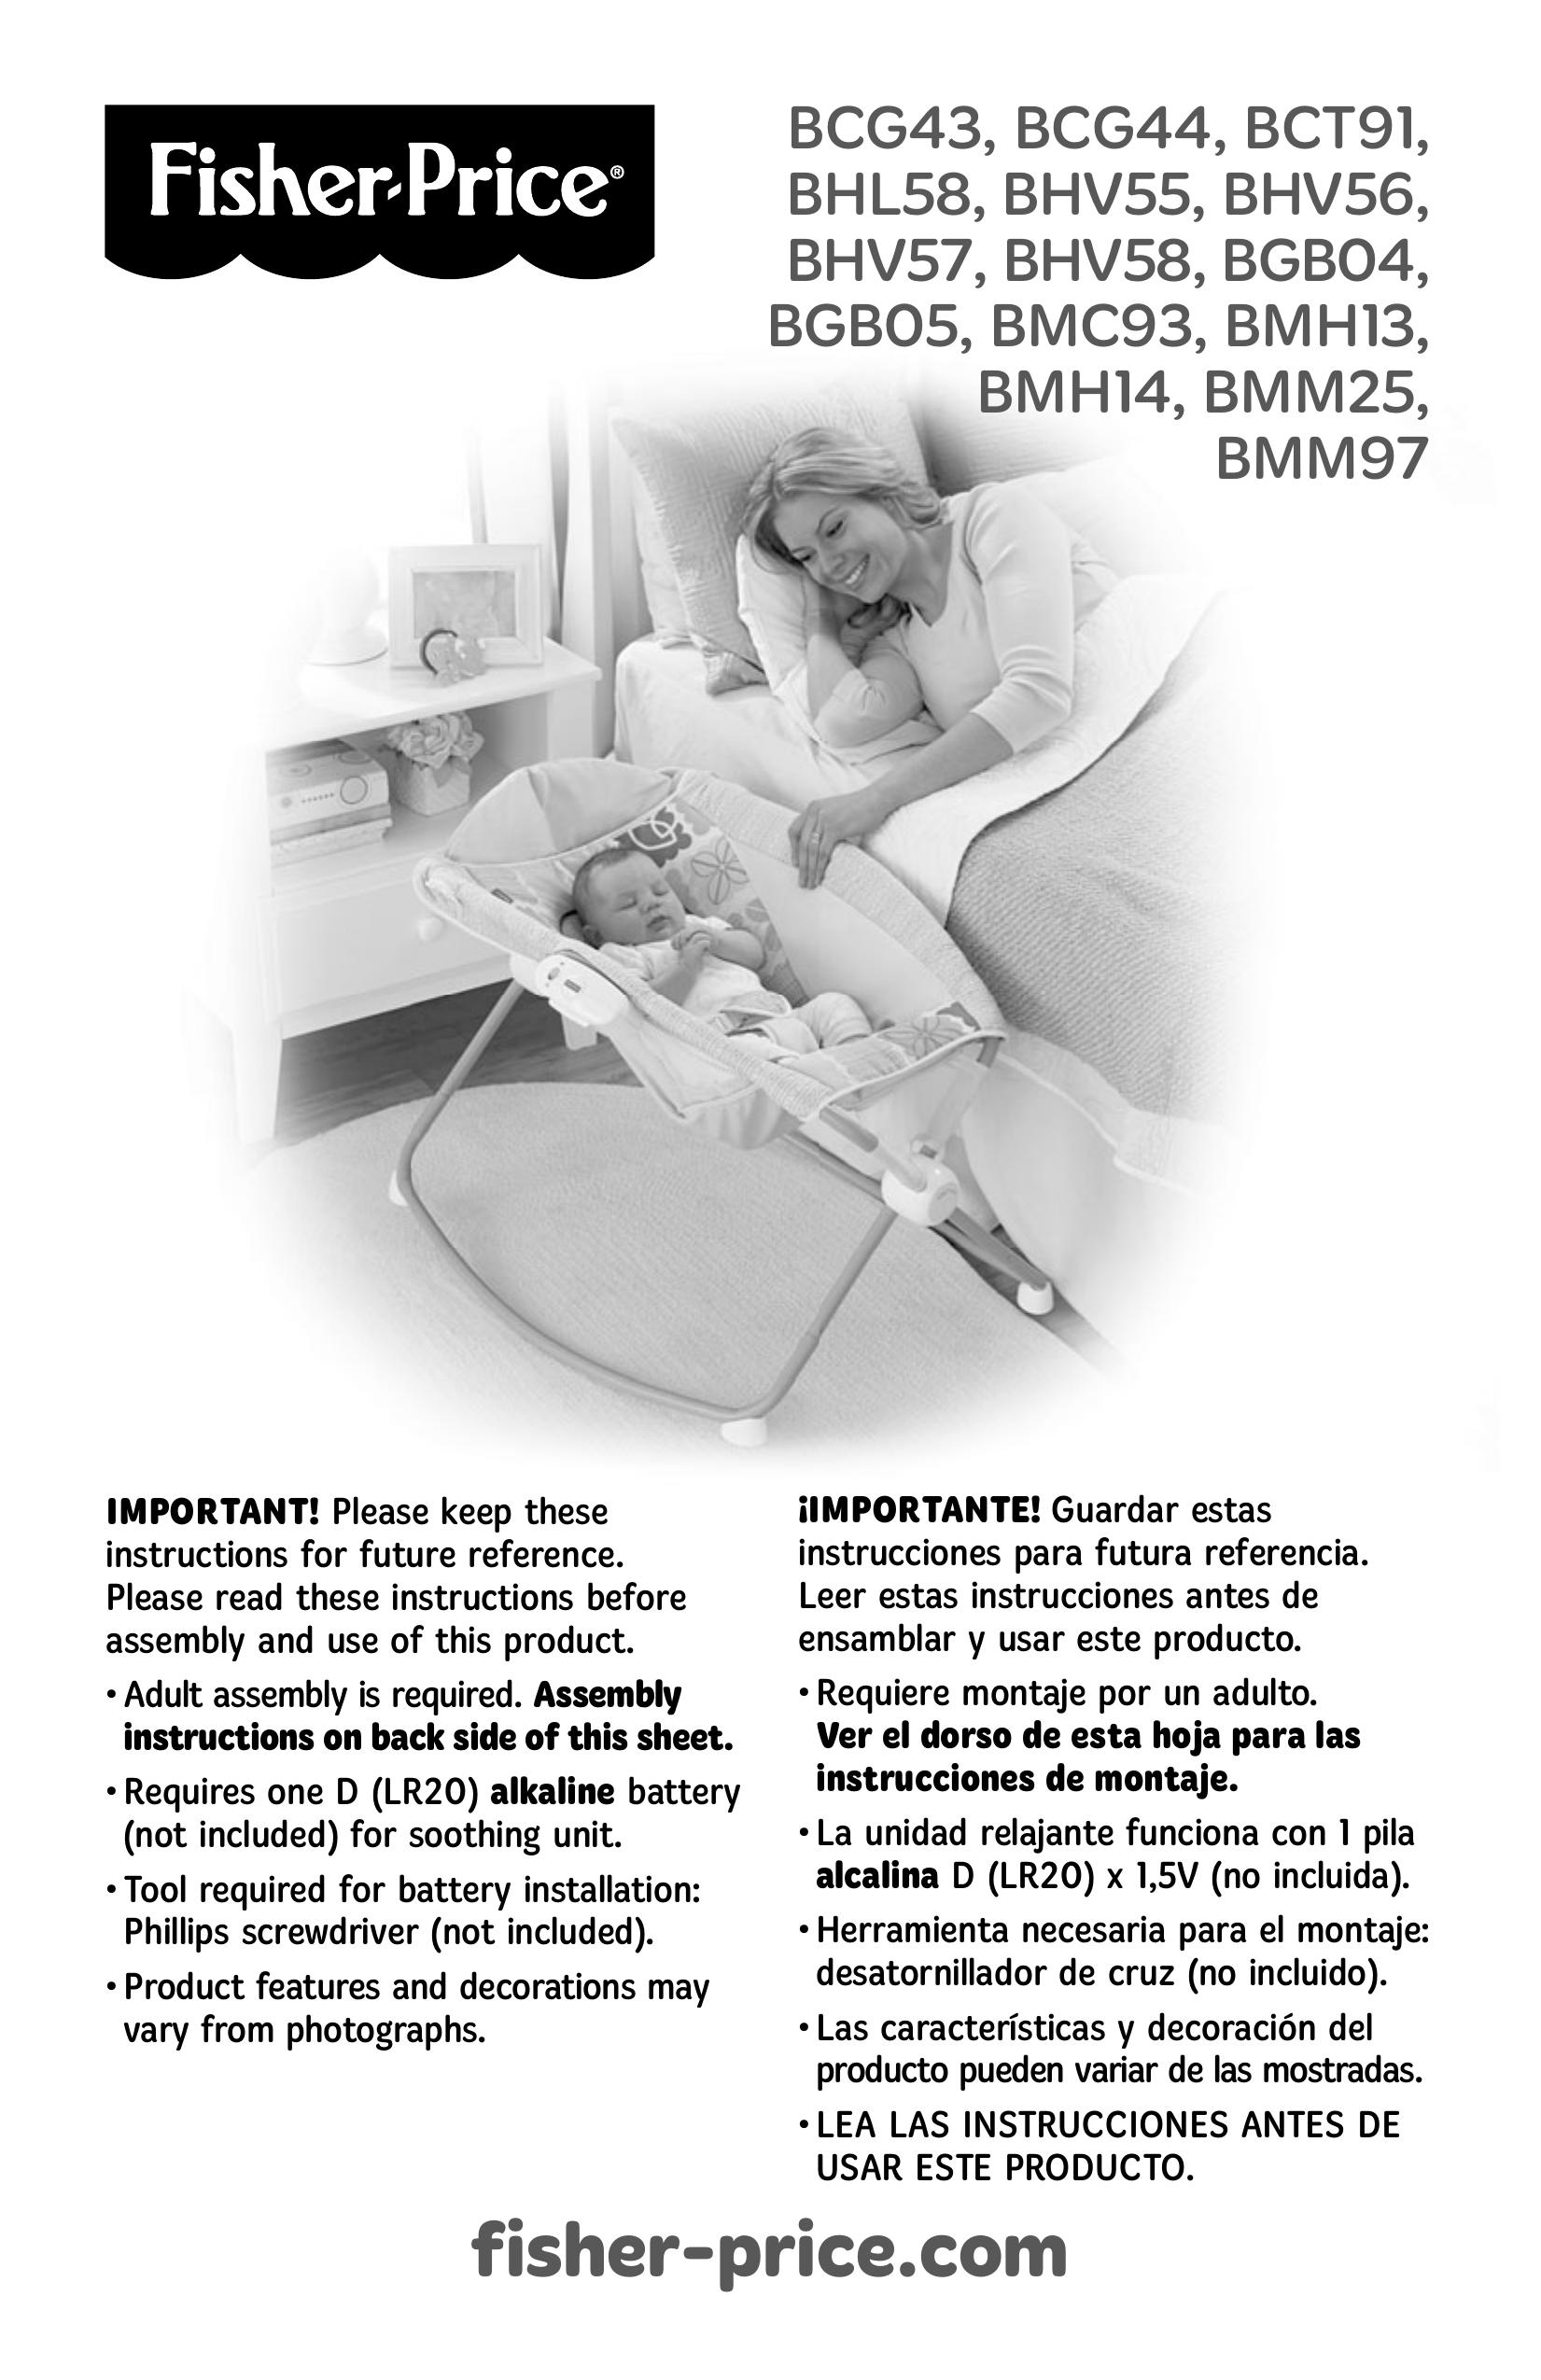 Fisher-Price BMC93 Sleep Apnea Machine User Manual